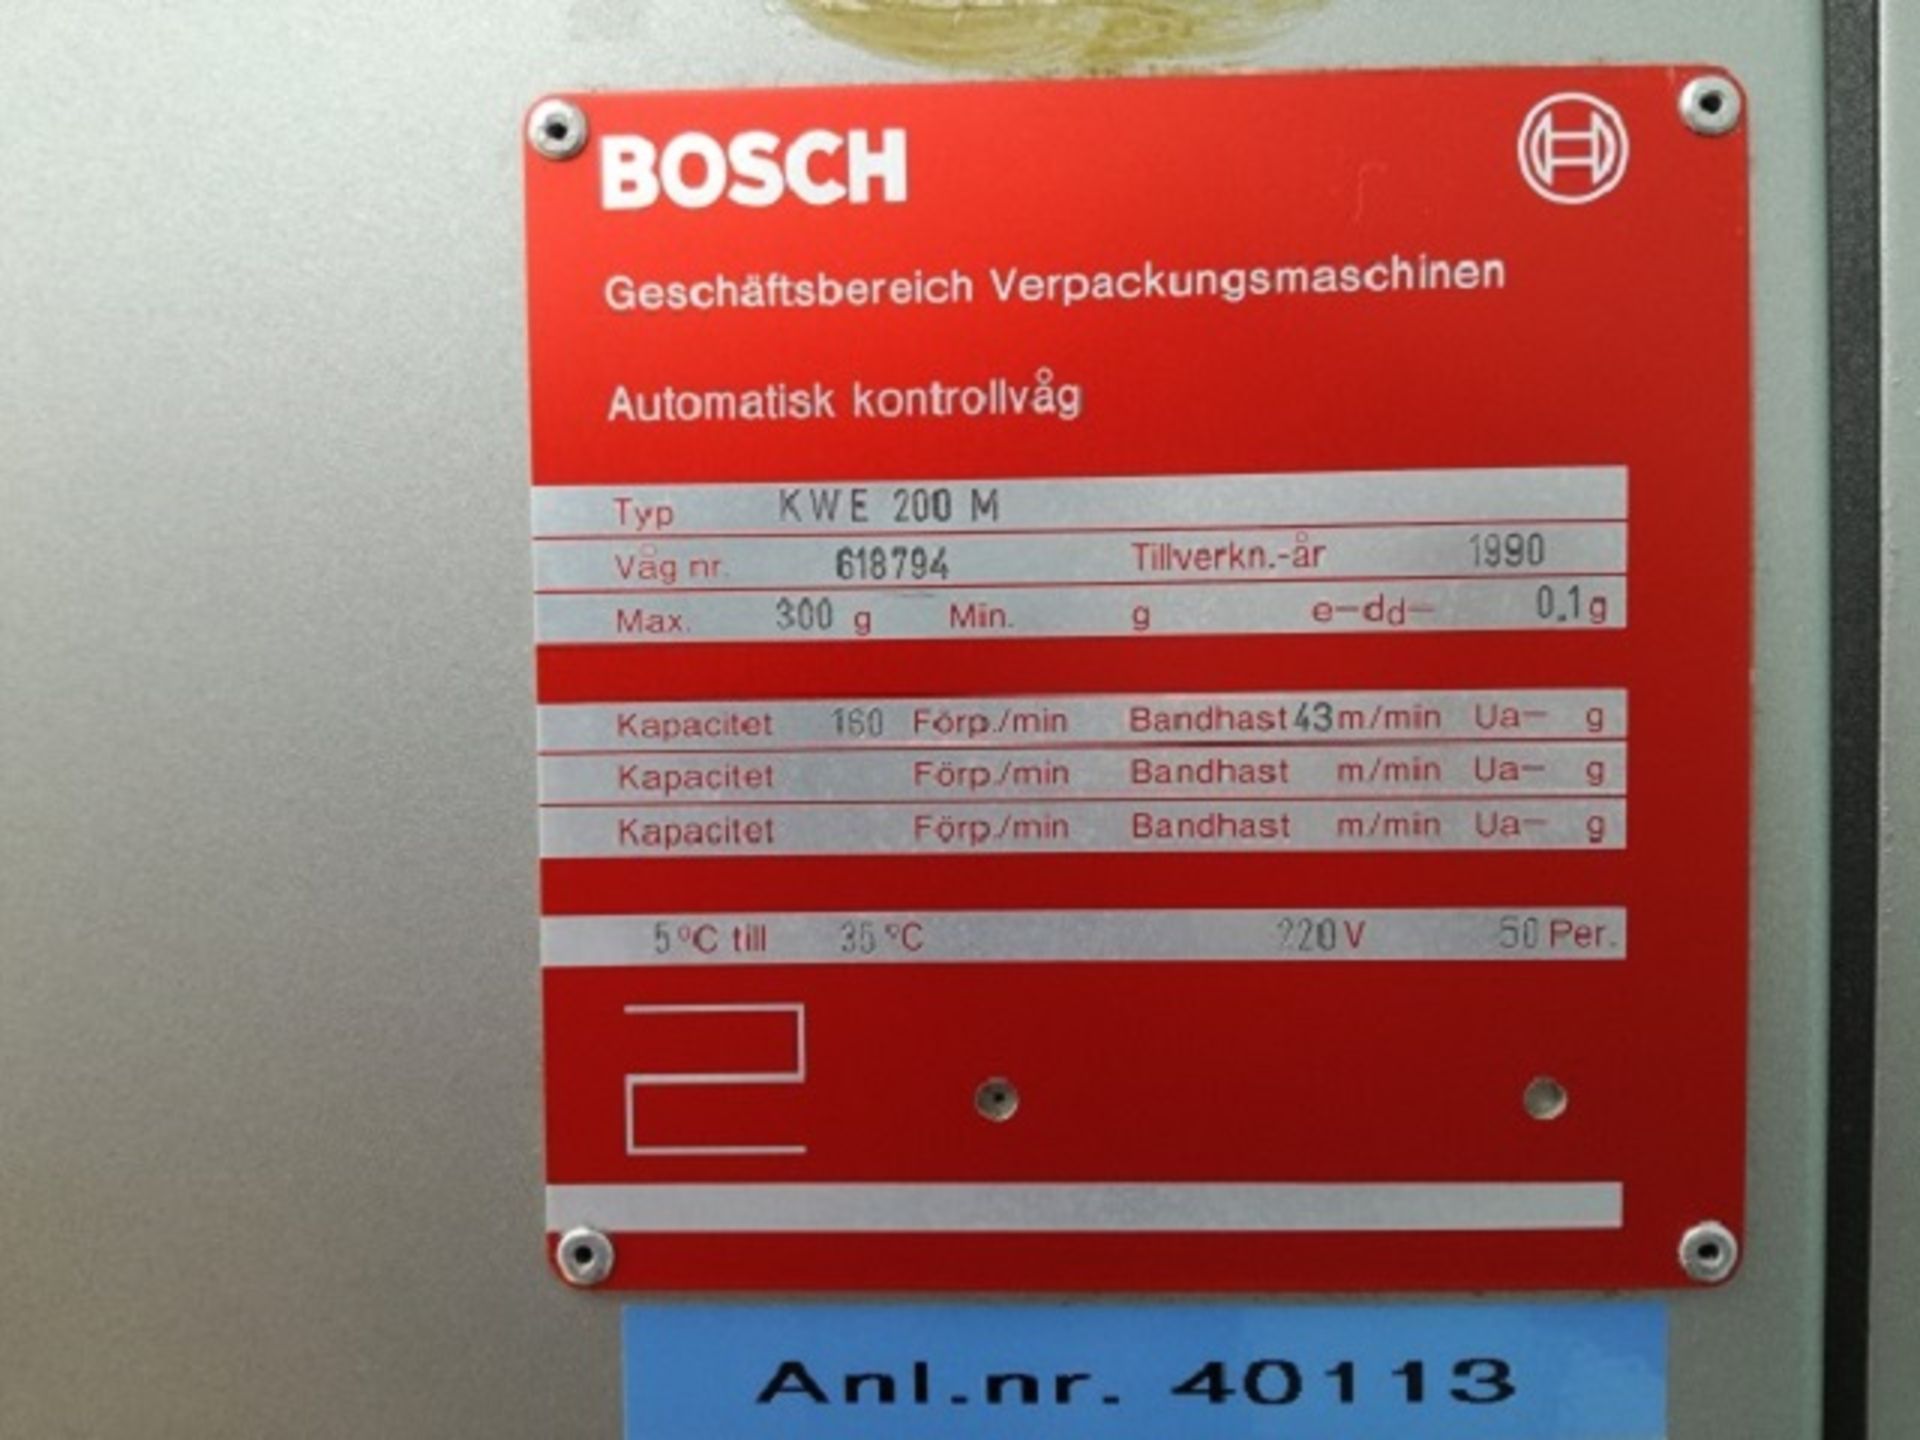 Bosch model KWE 200M modular in-line checkweighing system - Image 9 of 9